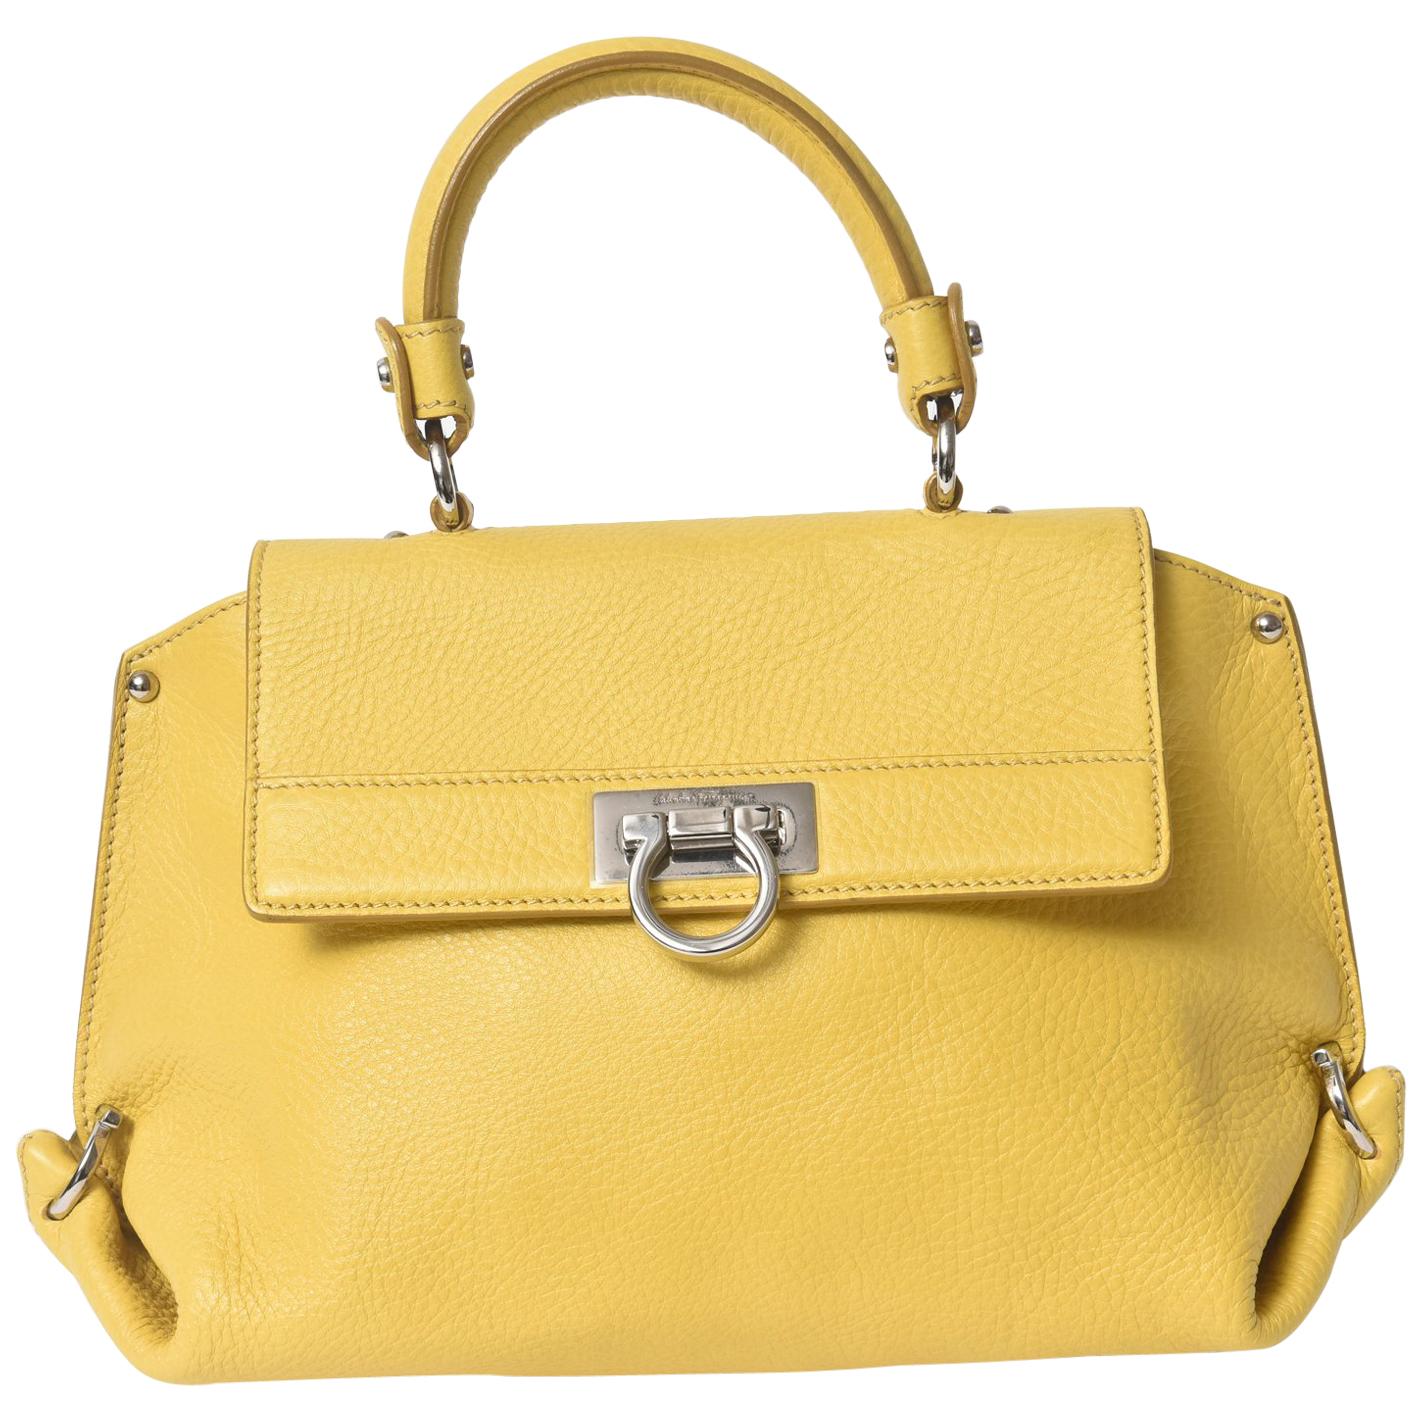 Salvatore Ferragamo Yellow Leather Sofia Satchel Purse Bag